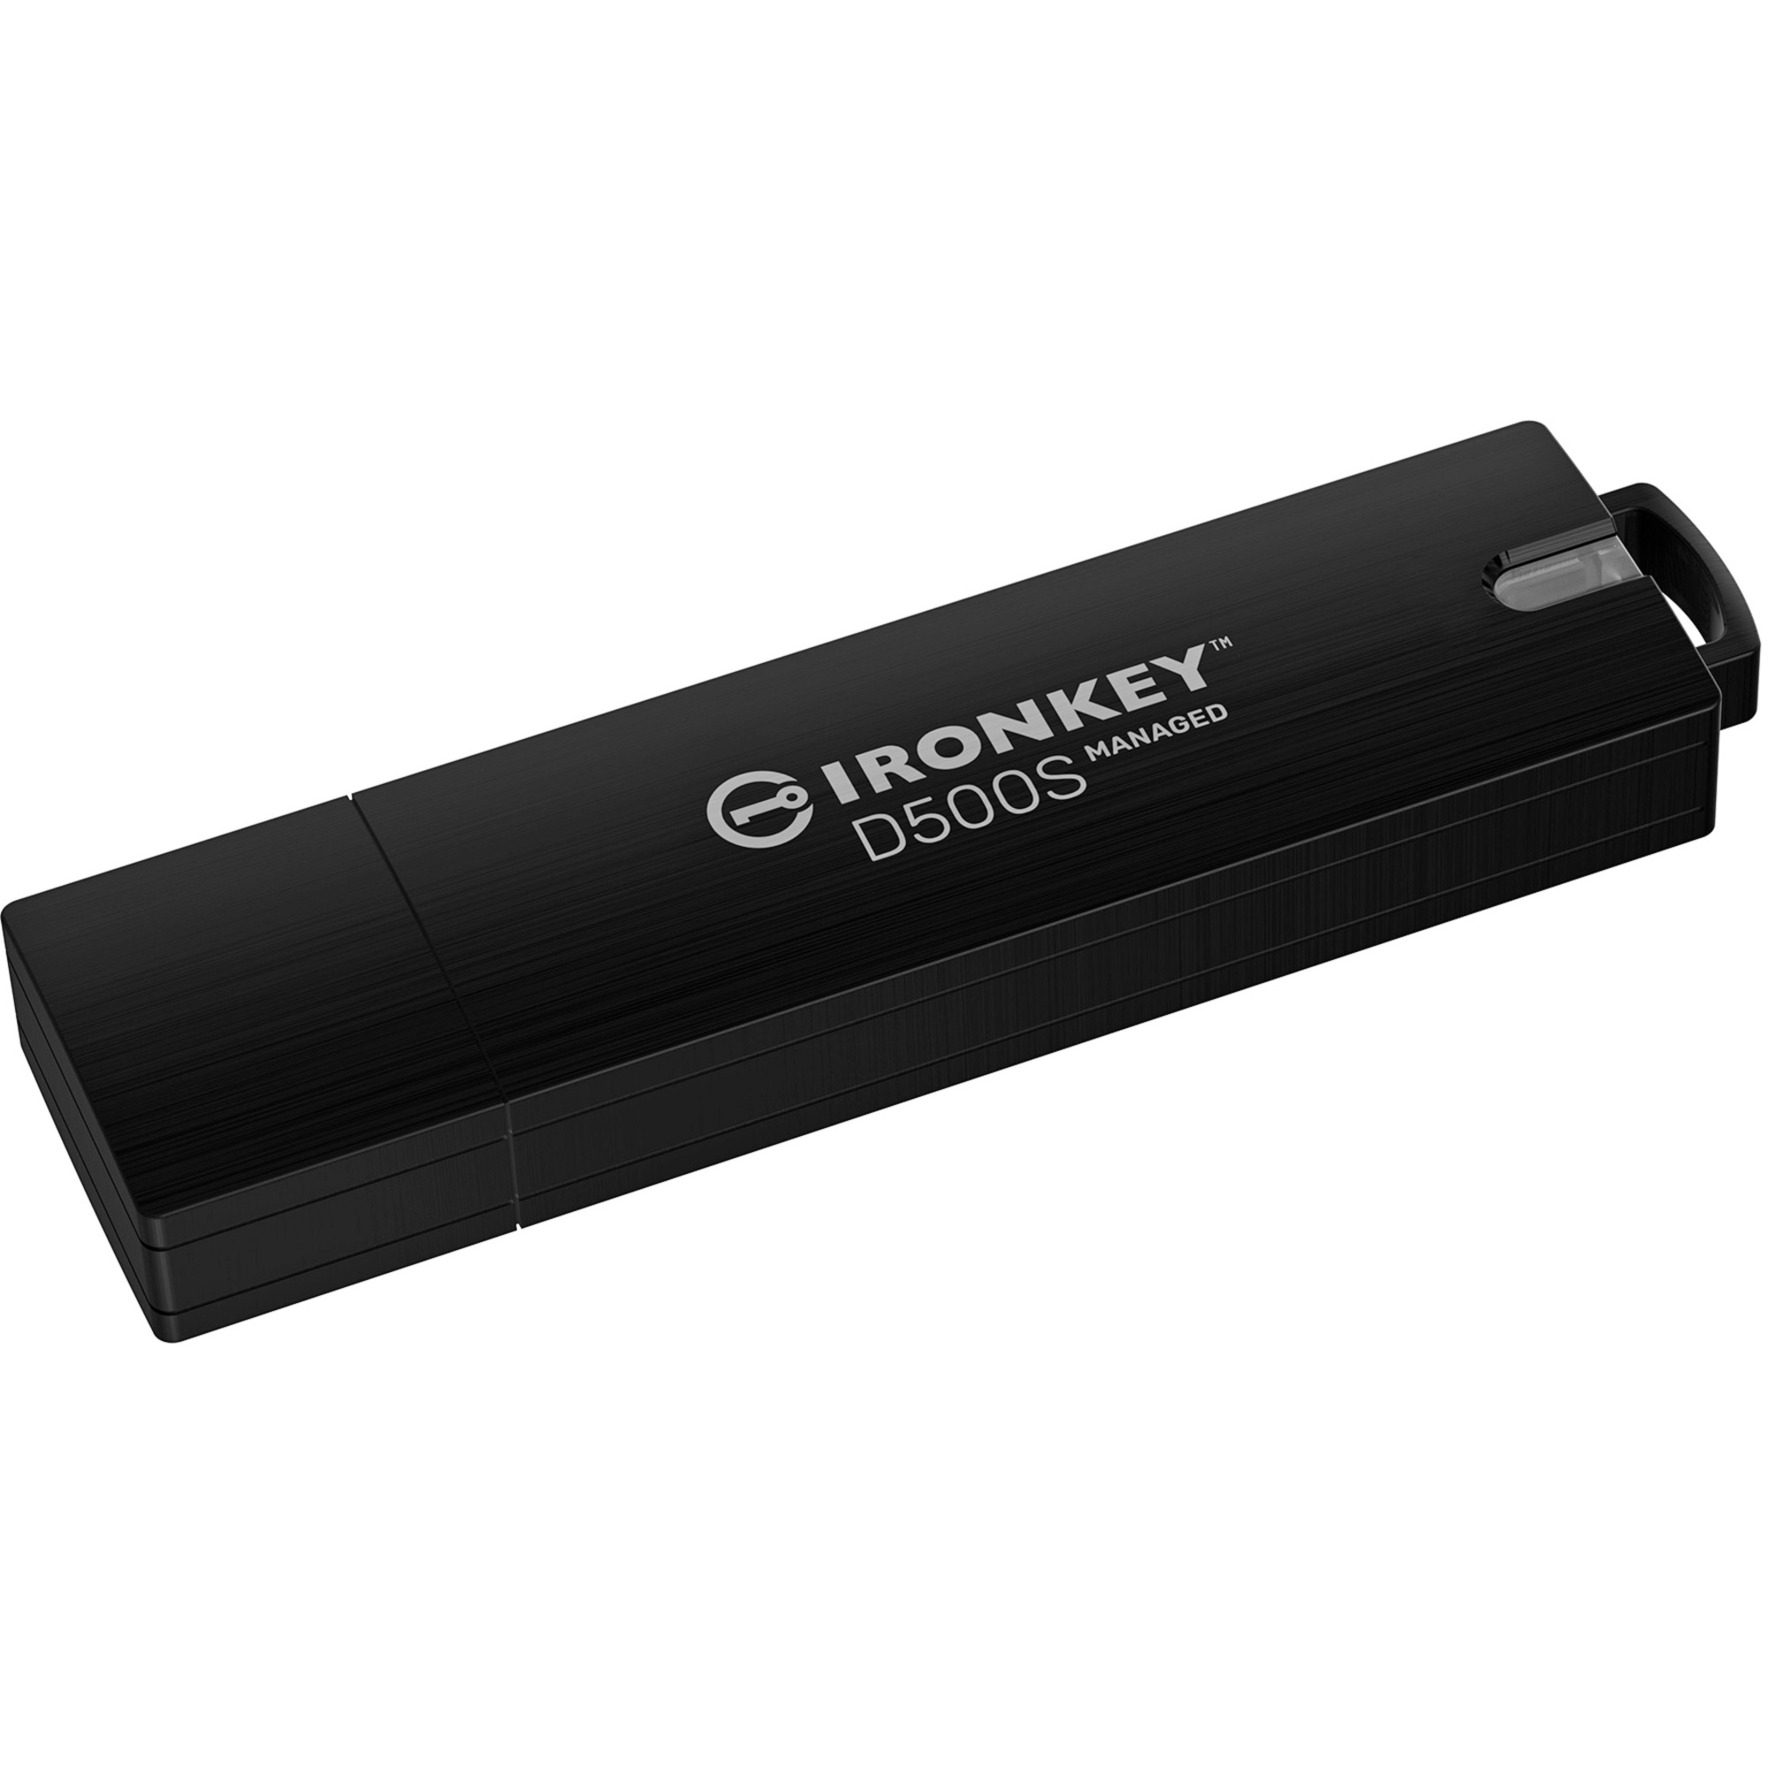 IronKey D500SM 128 GB, USB-Stick von Kingston